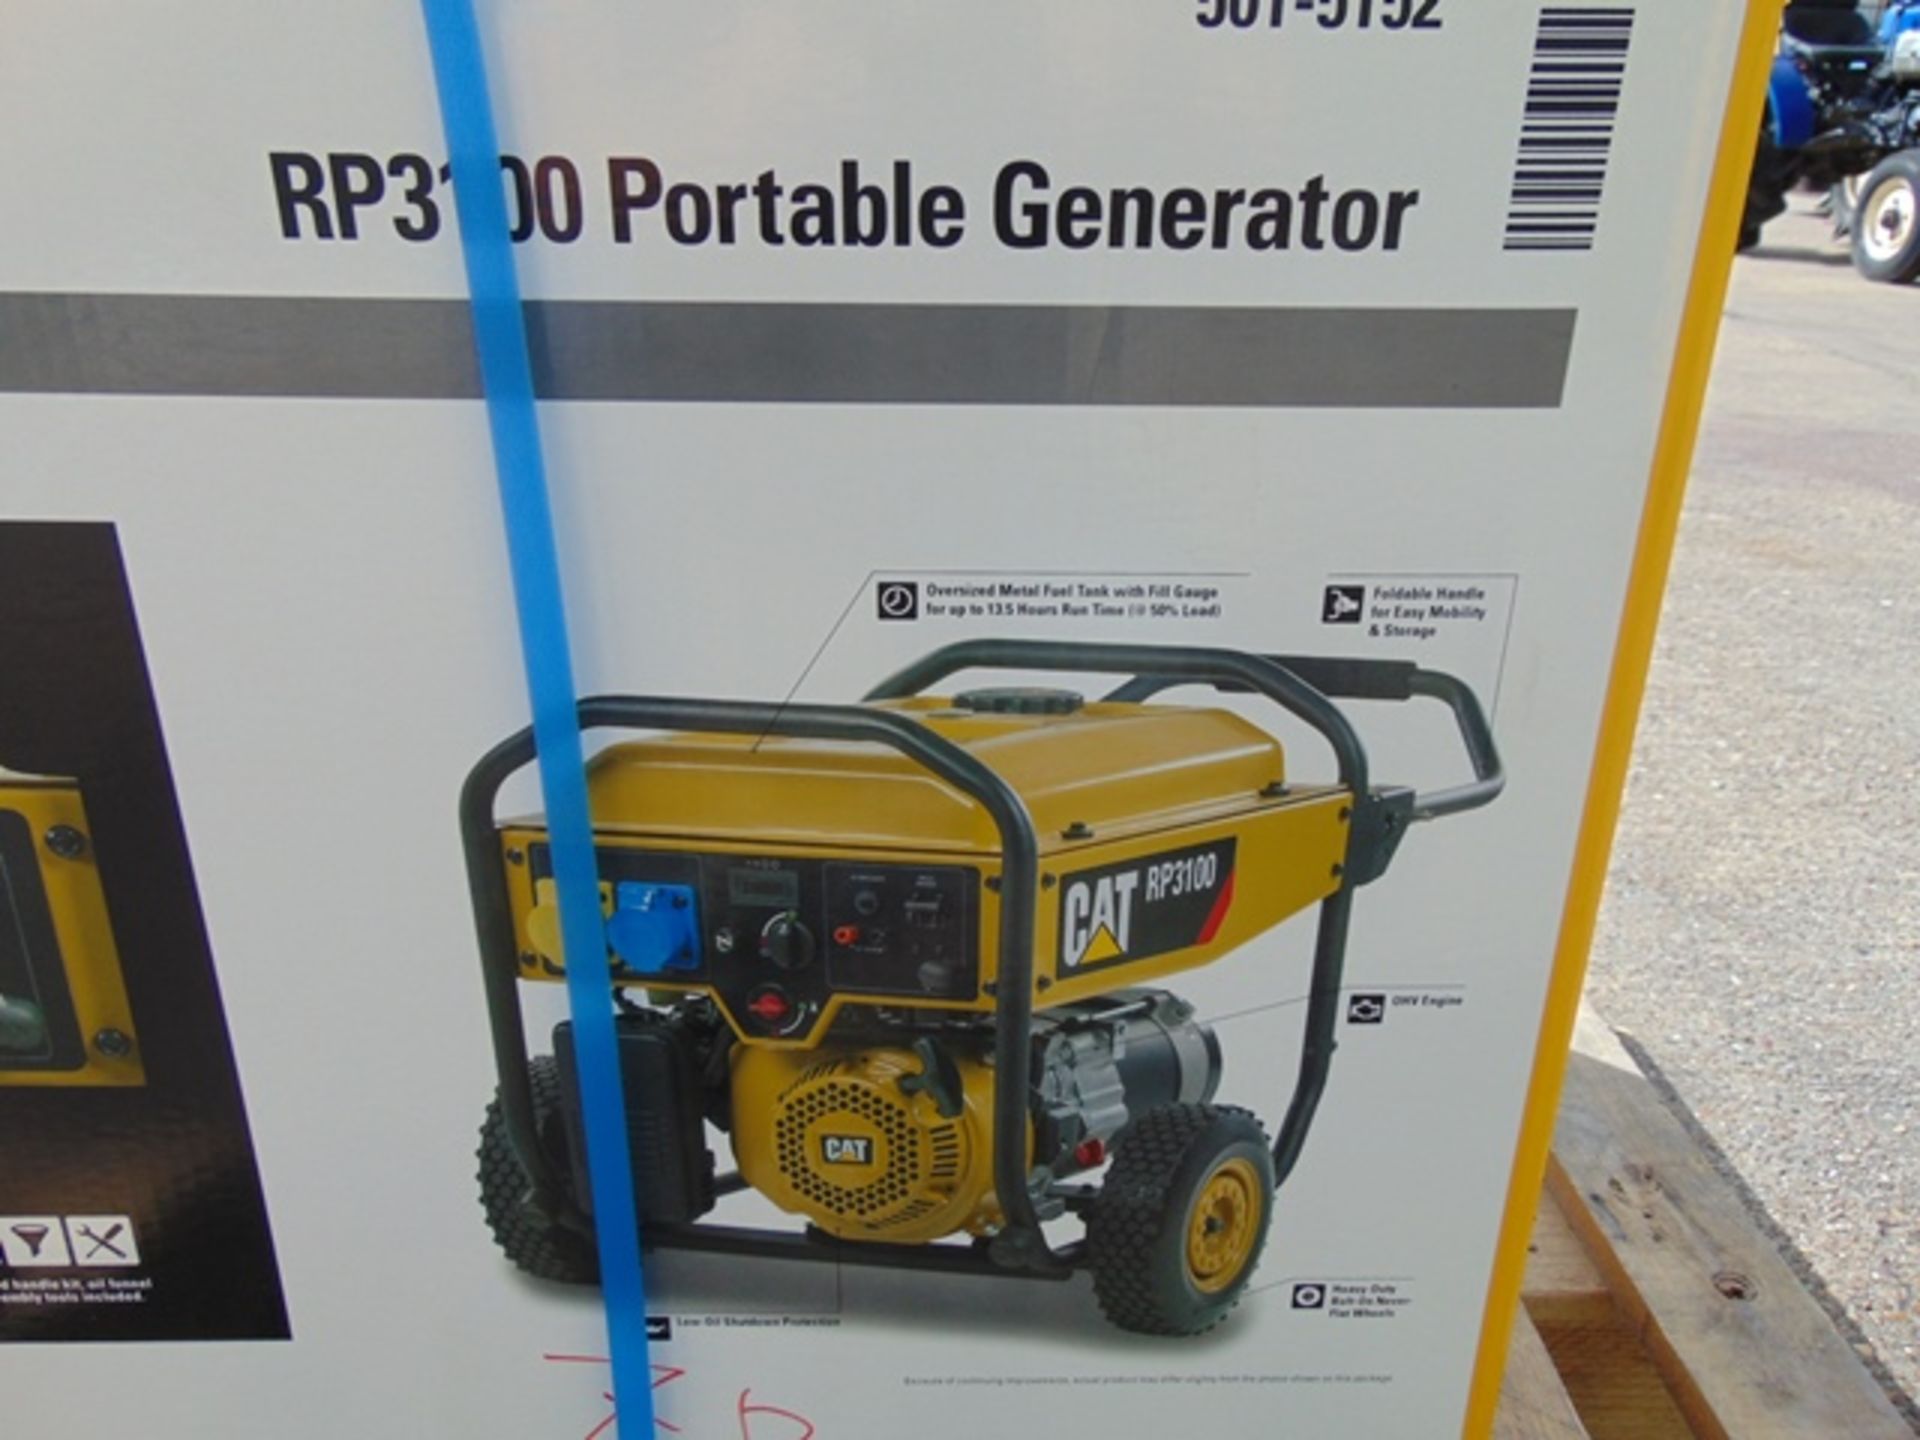 UNISSUED Caterpillar RP3100 industrial Petrol Generator Set - Image 7 of 10